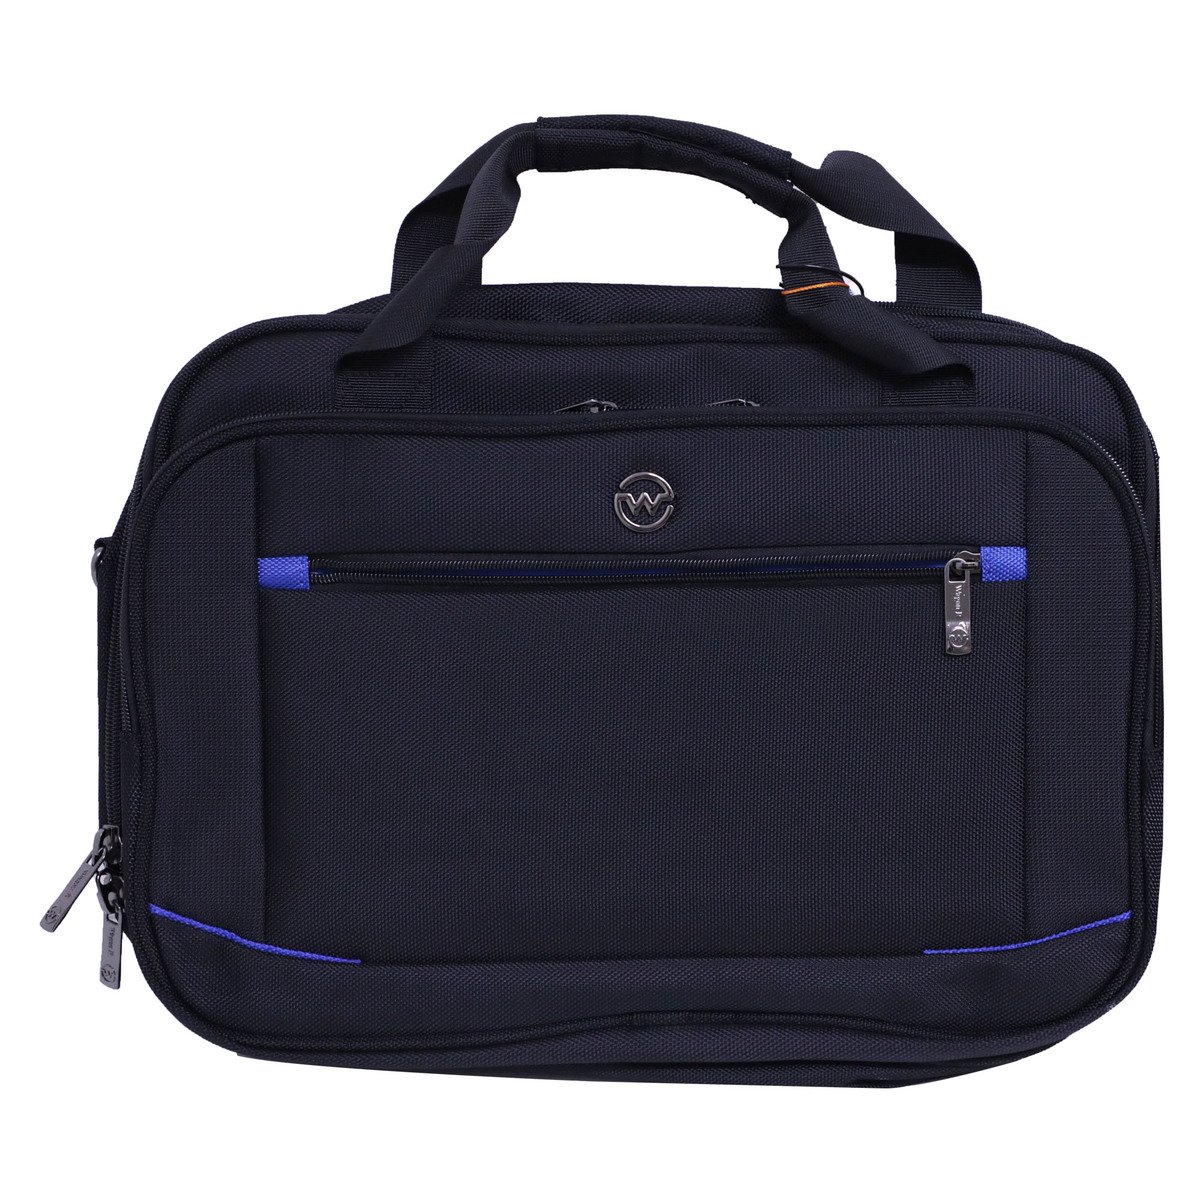 Wagon R Laptop Bag  LB1610 15.6in